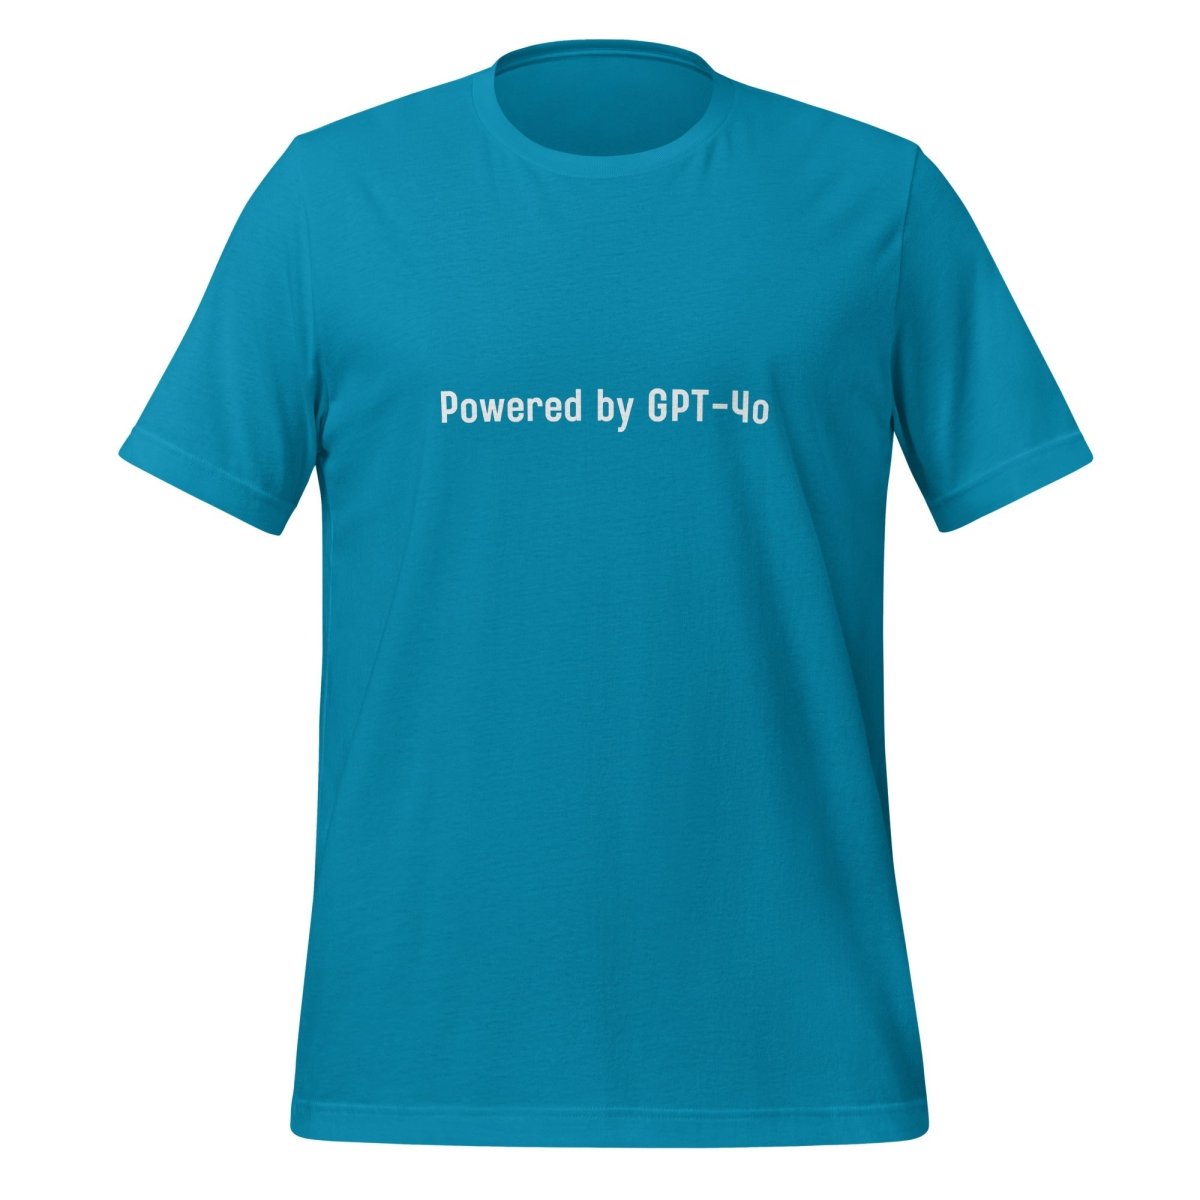 Powered by GPT - 4o T - Shirt 3 (unisex) - Aqua - AI Store